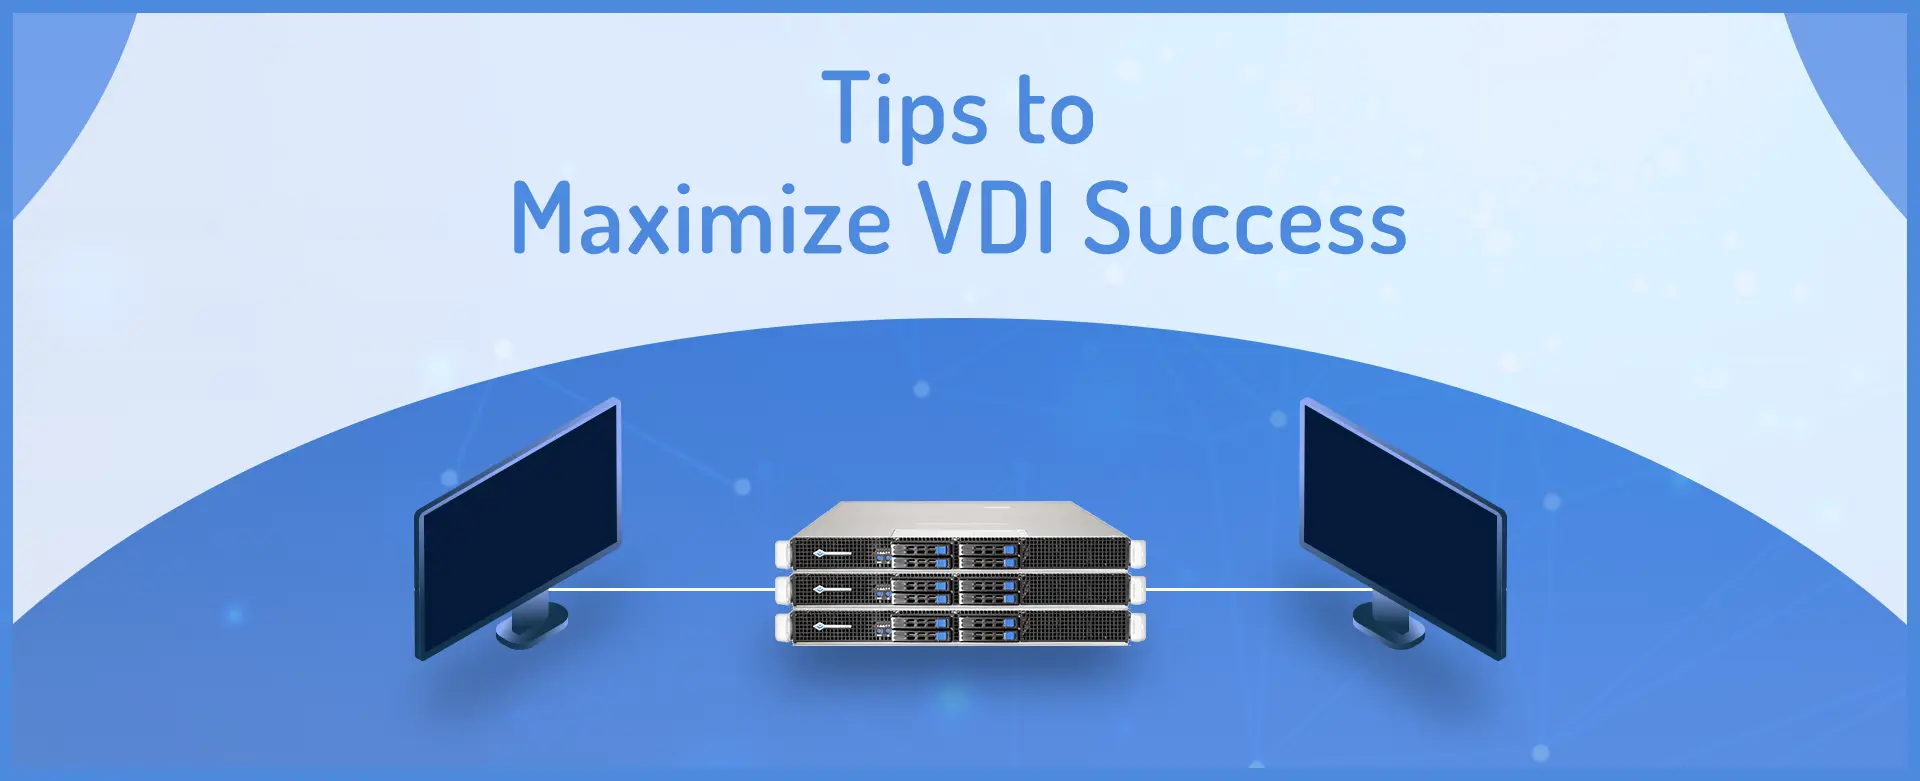 Tips to Maximize VDI Success